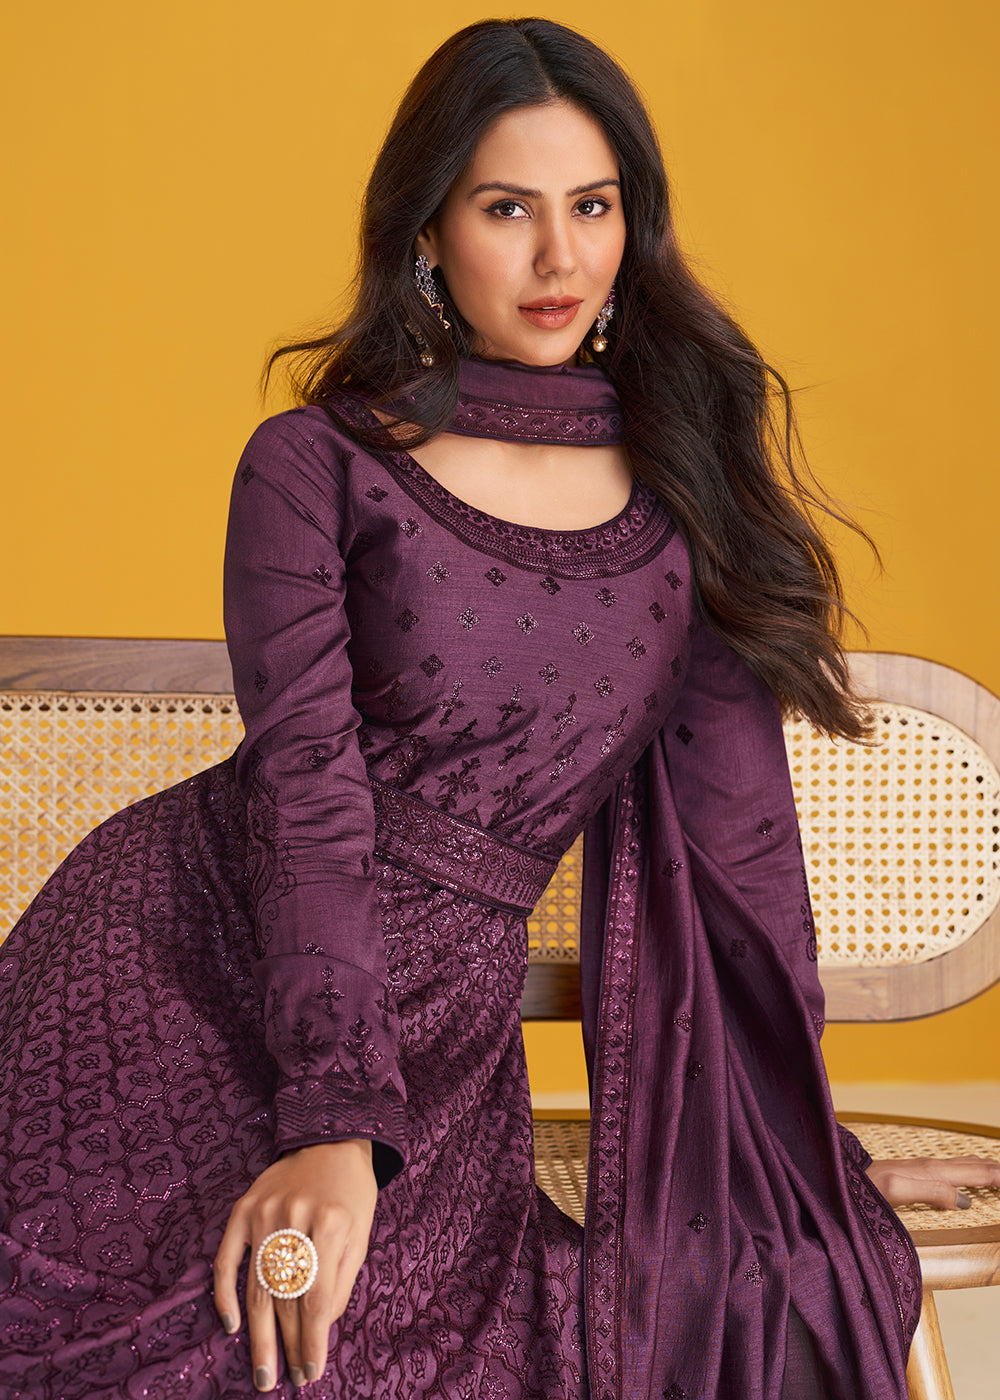 Buy Now Premium Silk Plum Purple Embroidered Wedding Anarkali Suit Online in USA, UK, Australia, New Zealand, Canada & Worldwide at Empress Clothing.